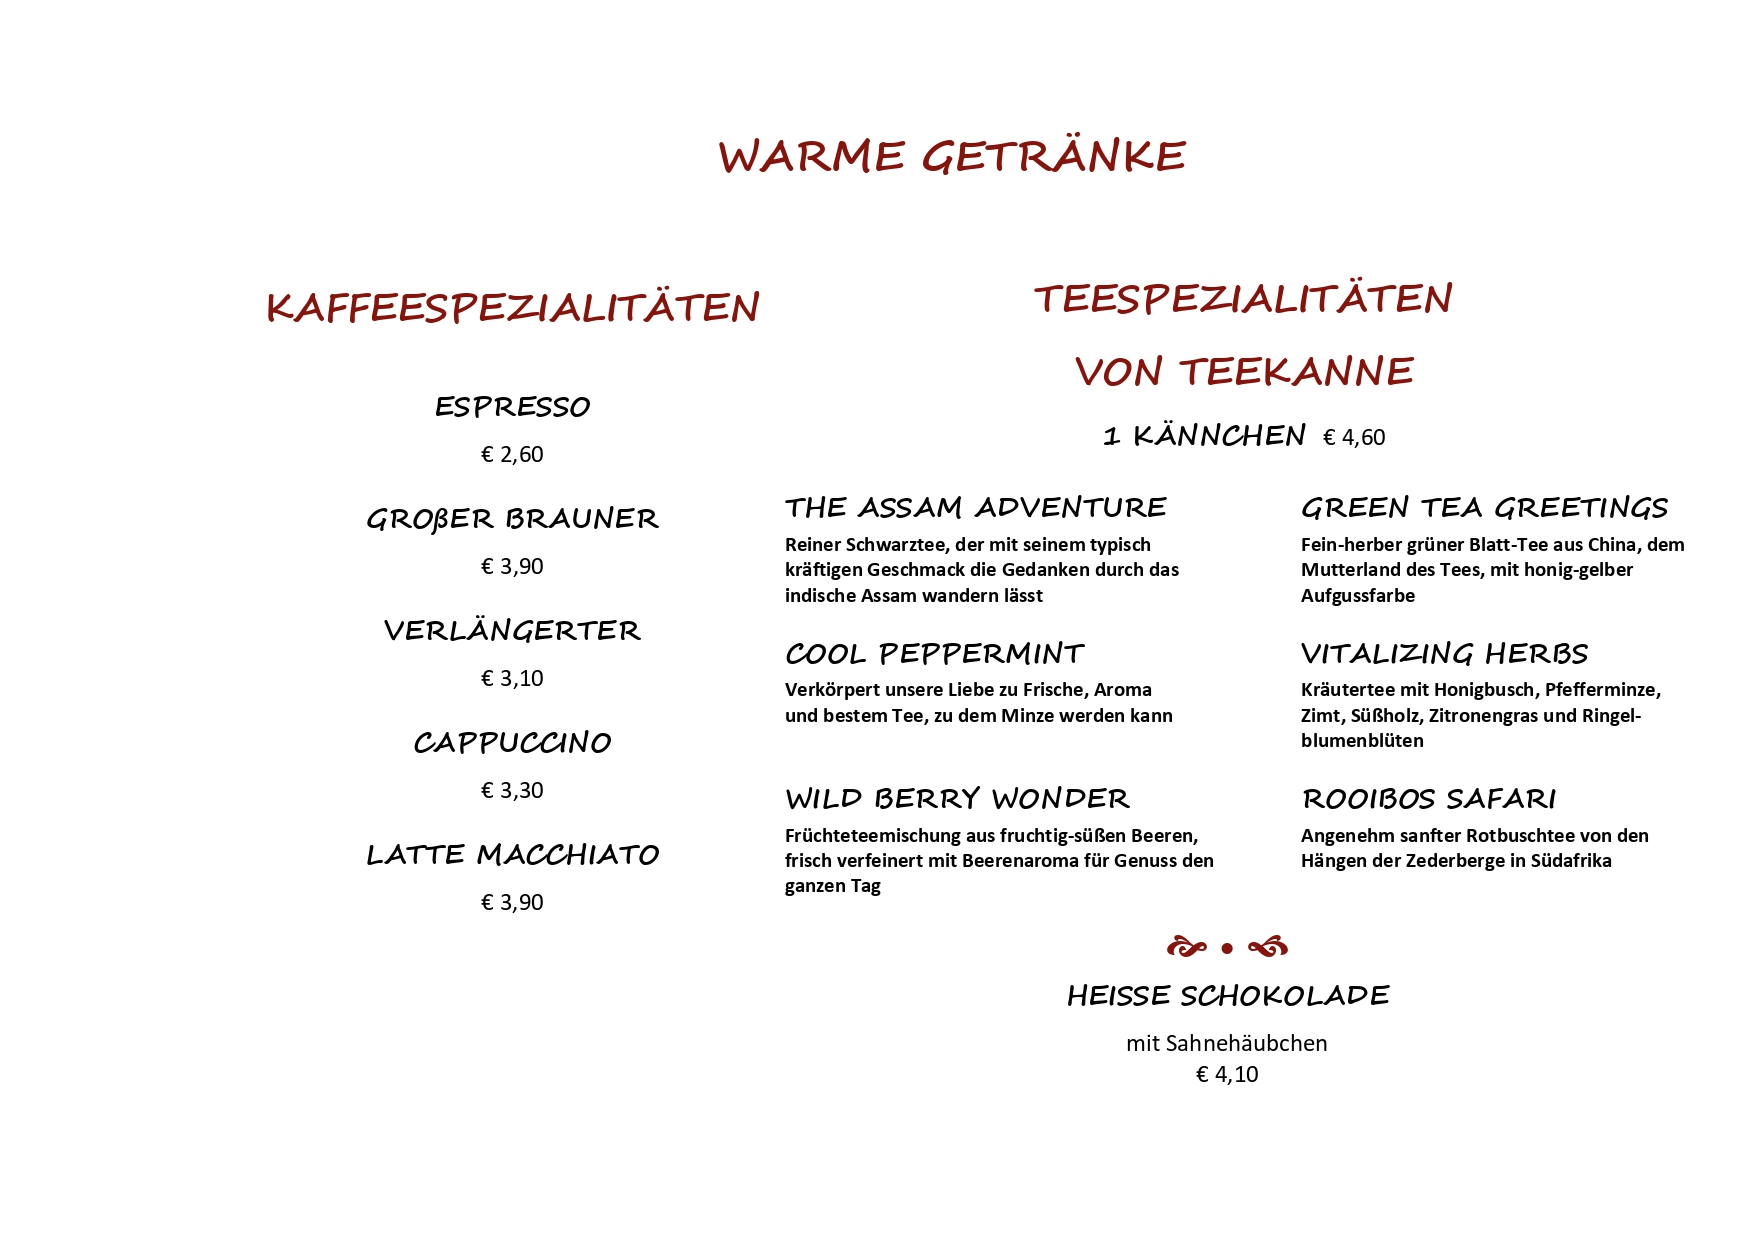 10_Warme Getränke (Bier)[24]-converted_page-0001.jpg